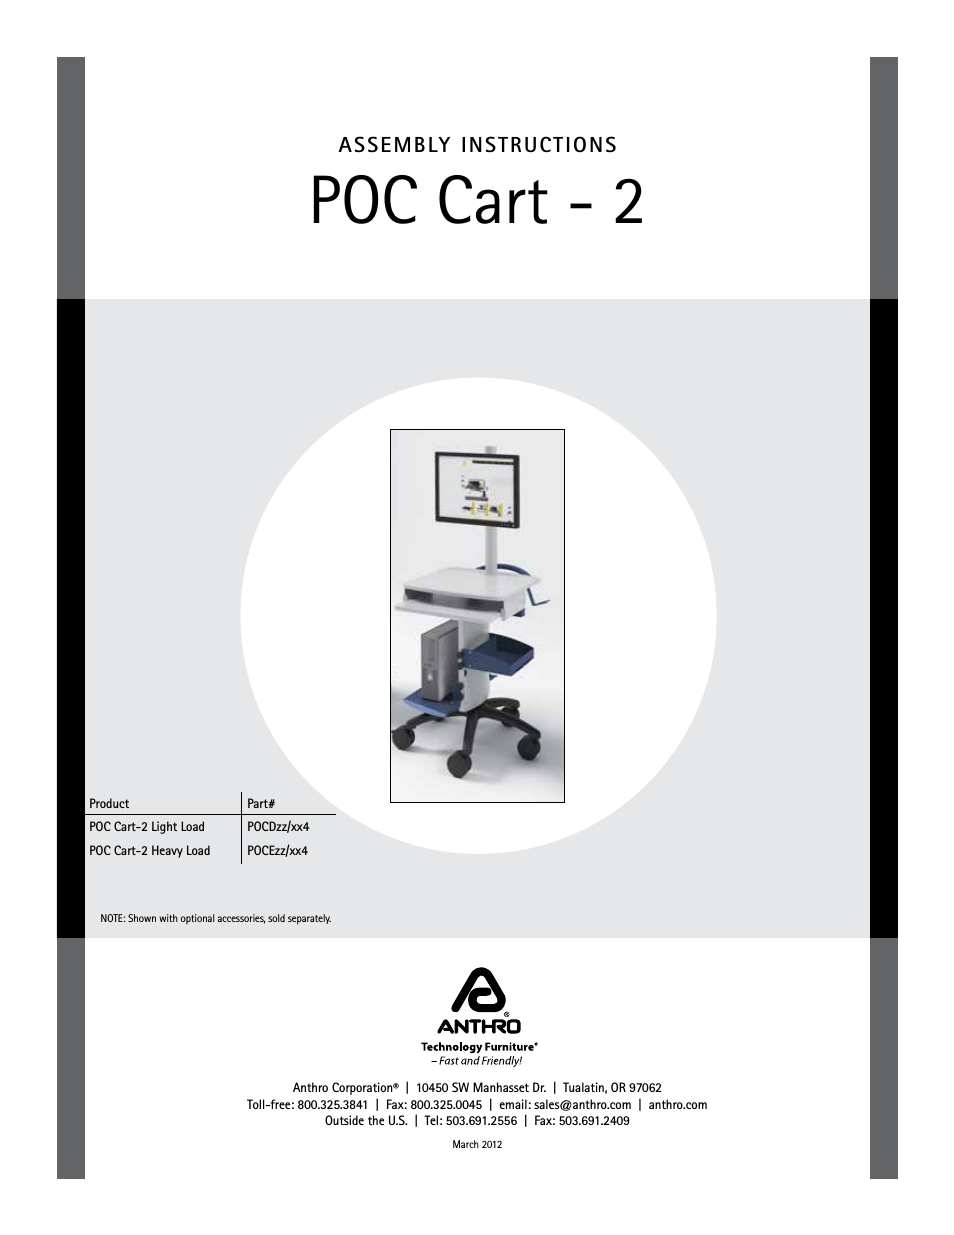 POC Cart 2 Assembly Instructions